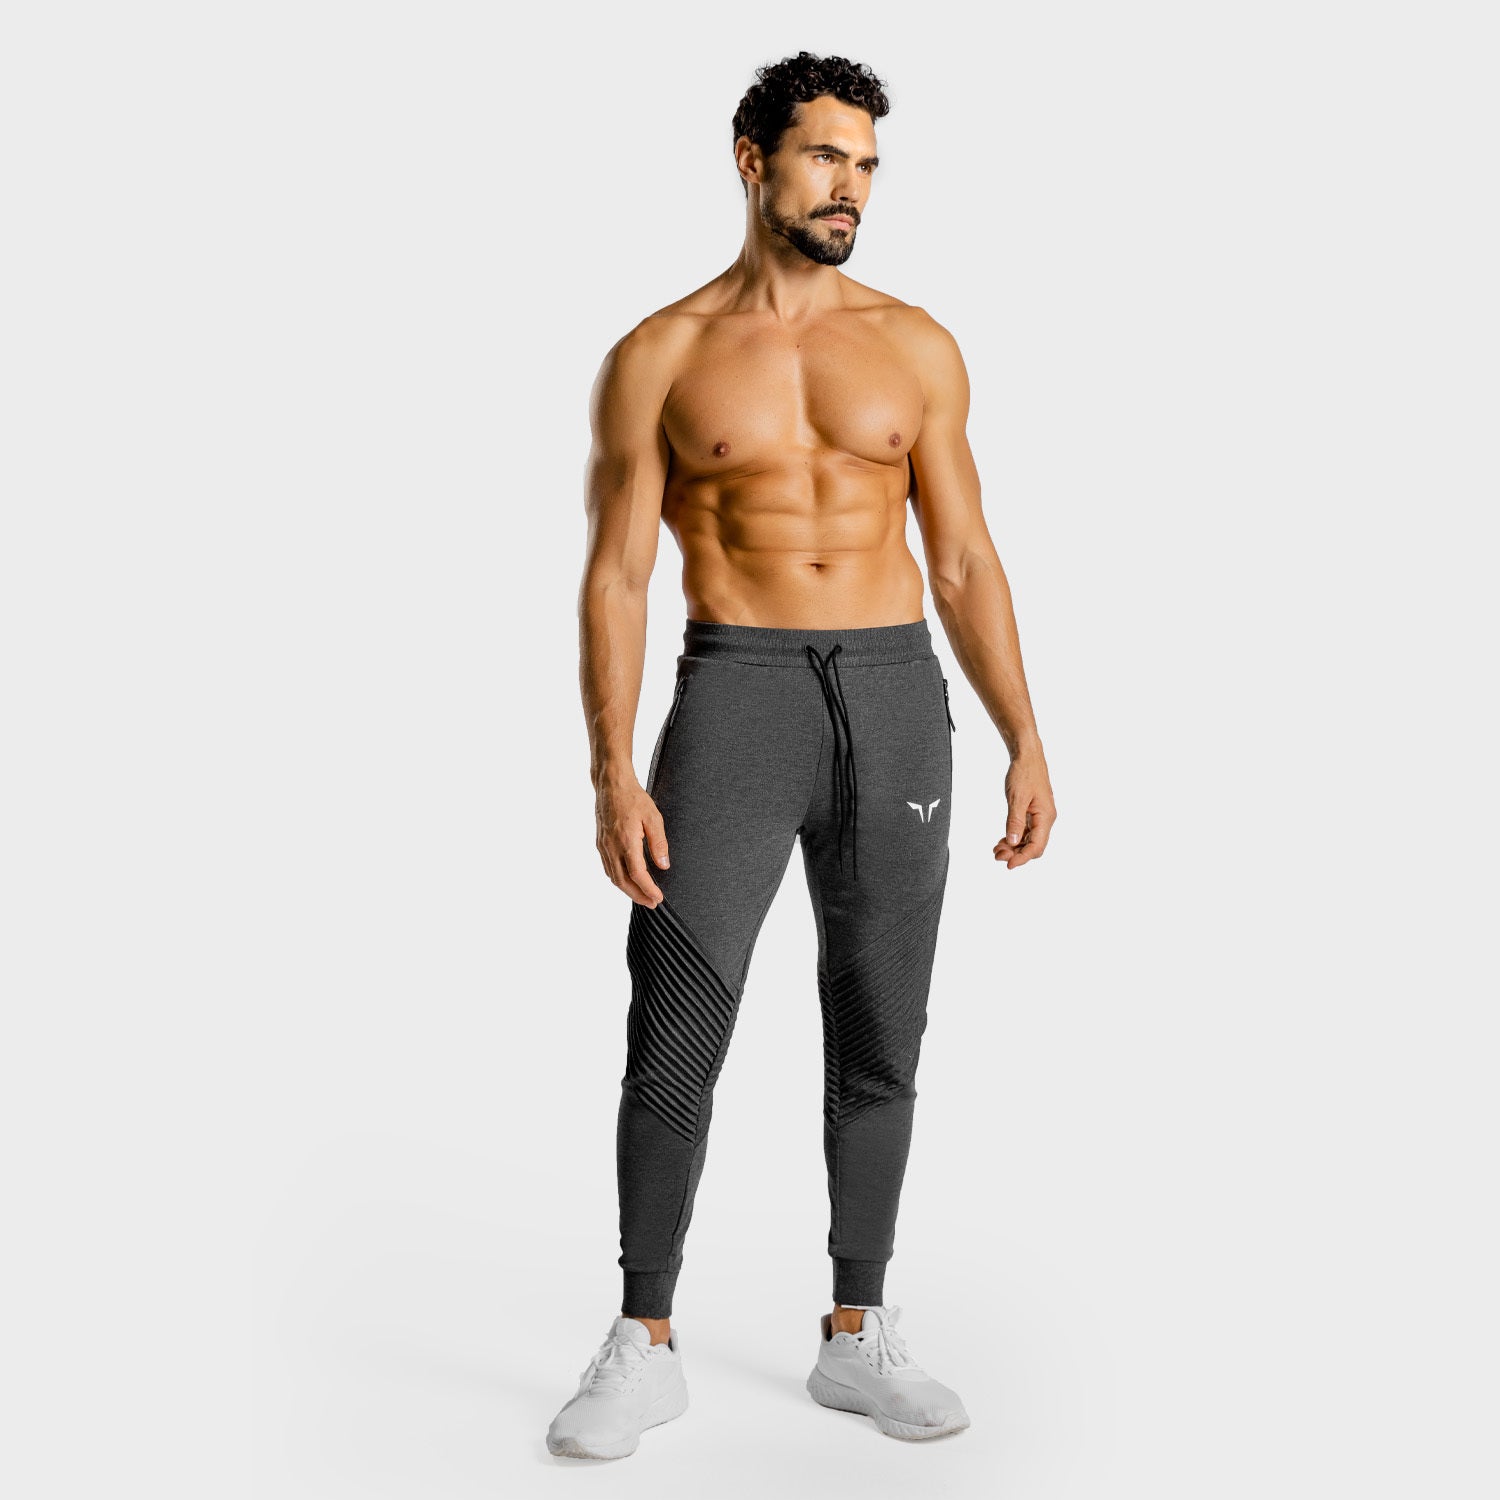 squatwolf-workout-pants-for-men-statement-ribbed-joggers-melange-grey-gym-wear